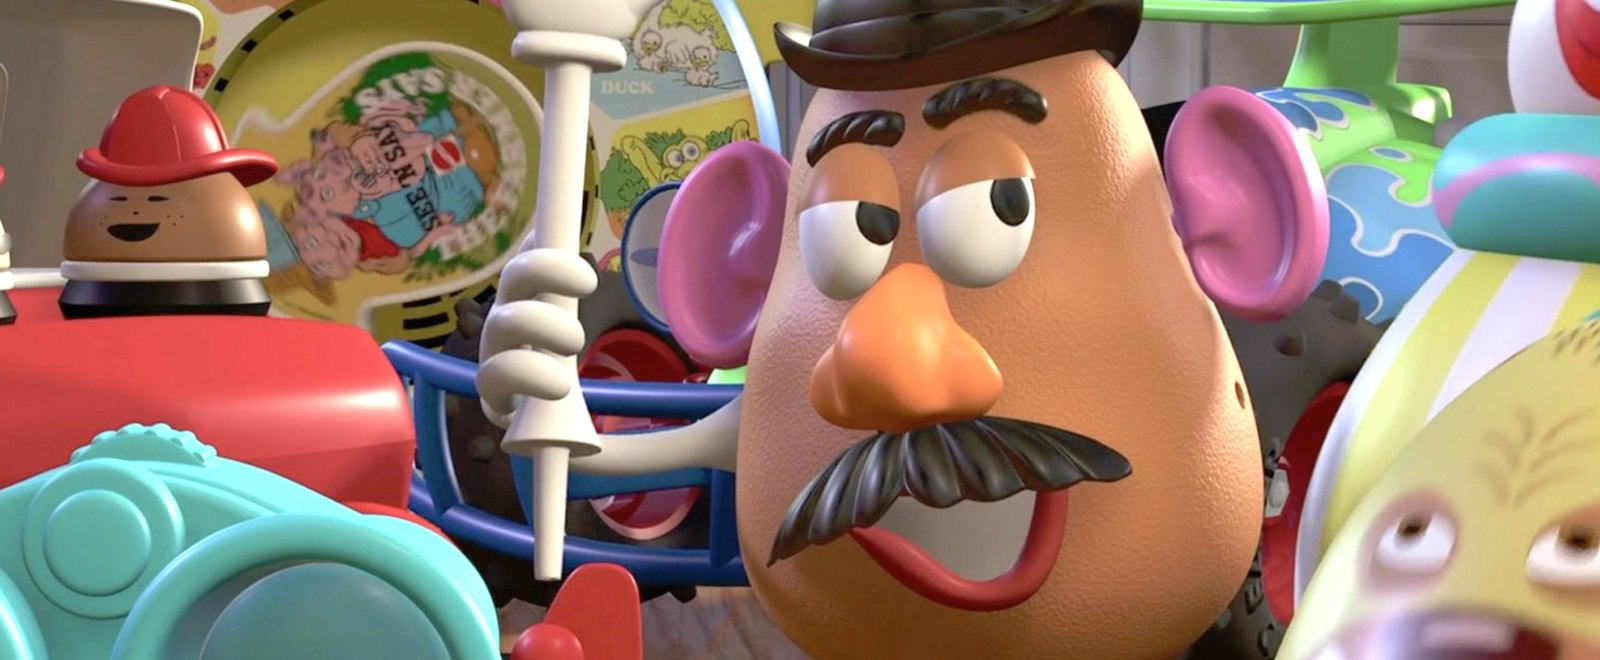 mr-potato-head-toy-story.jpg